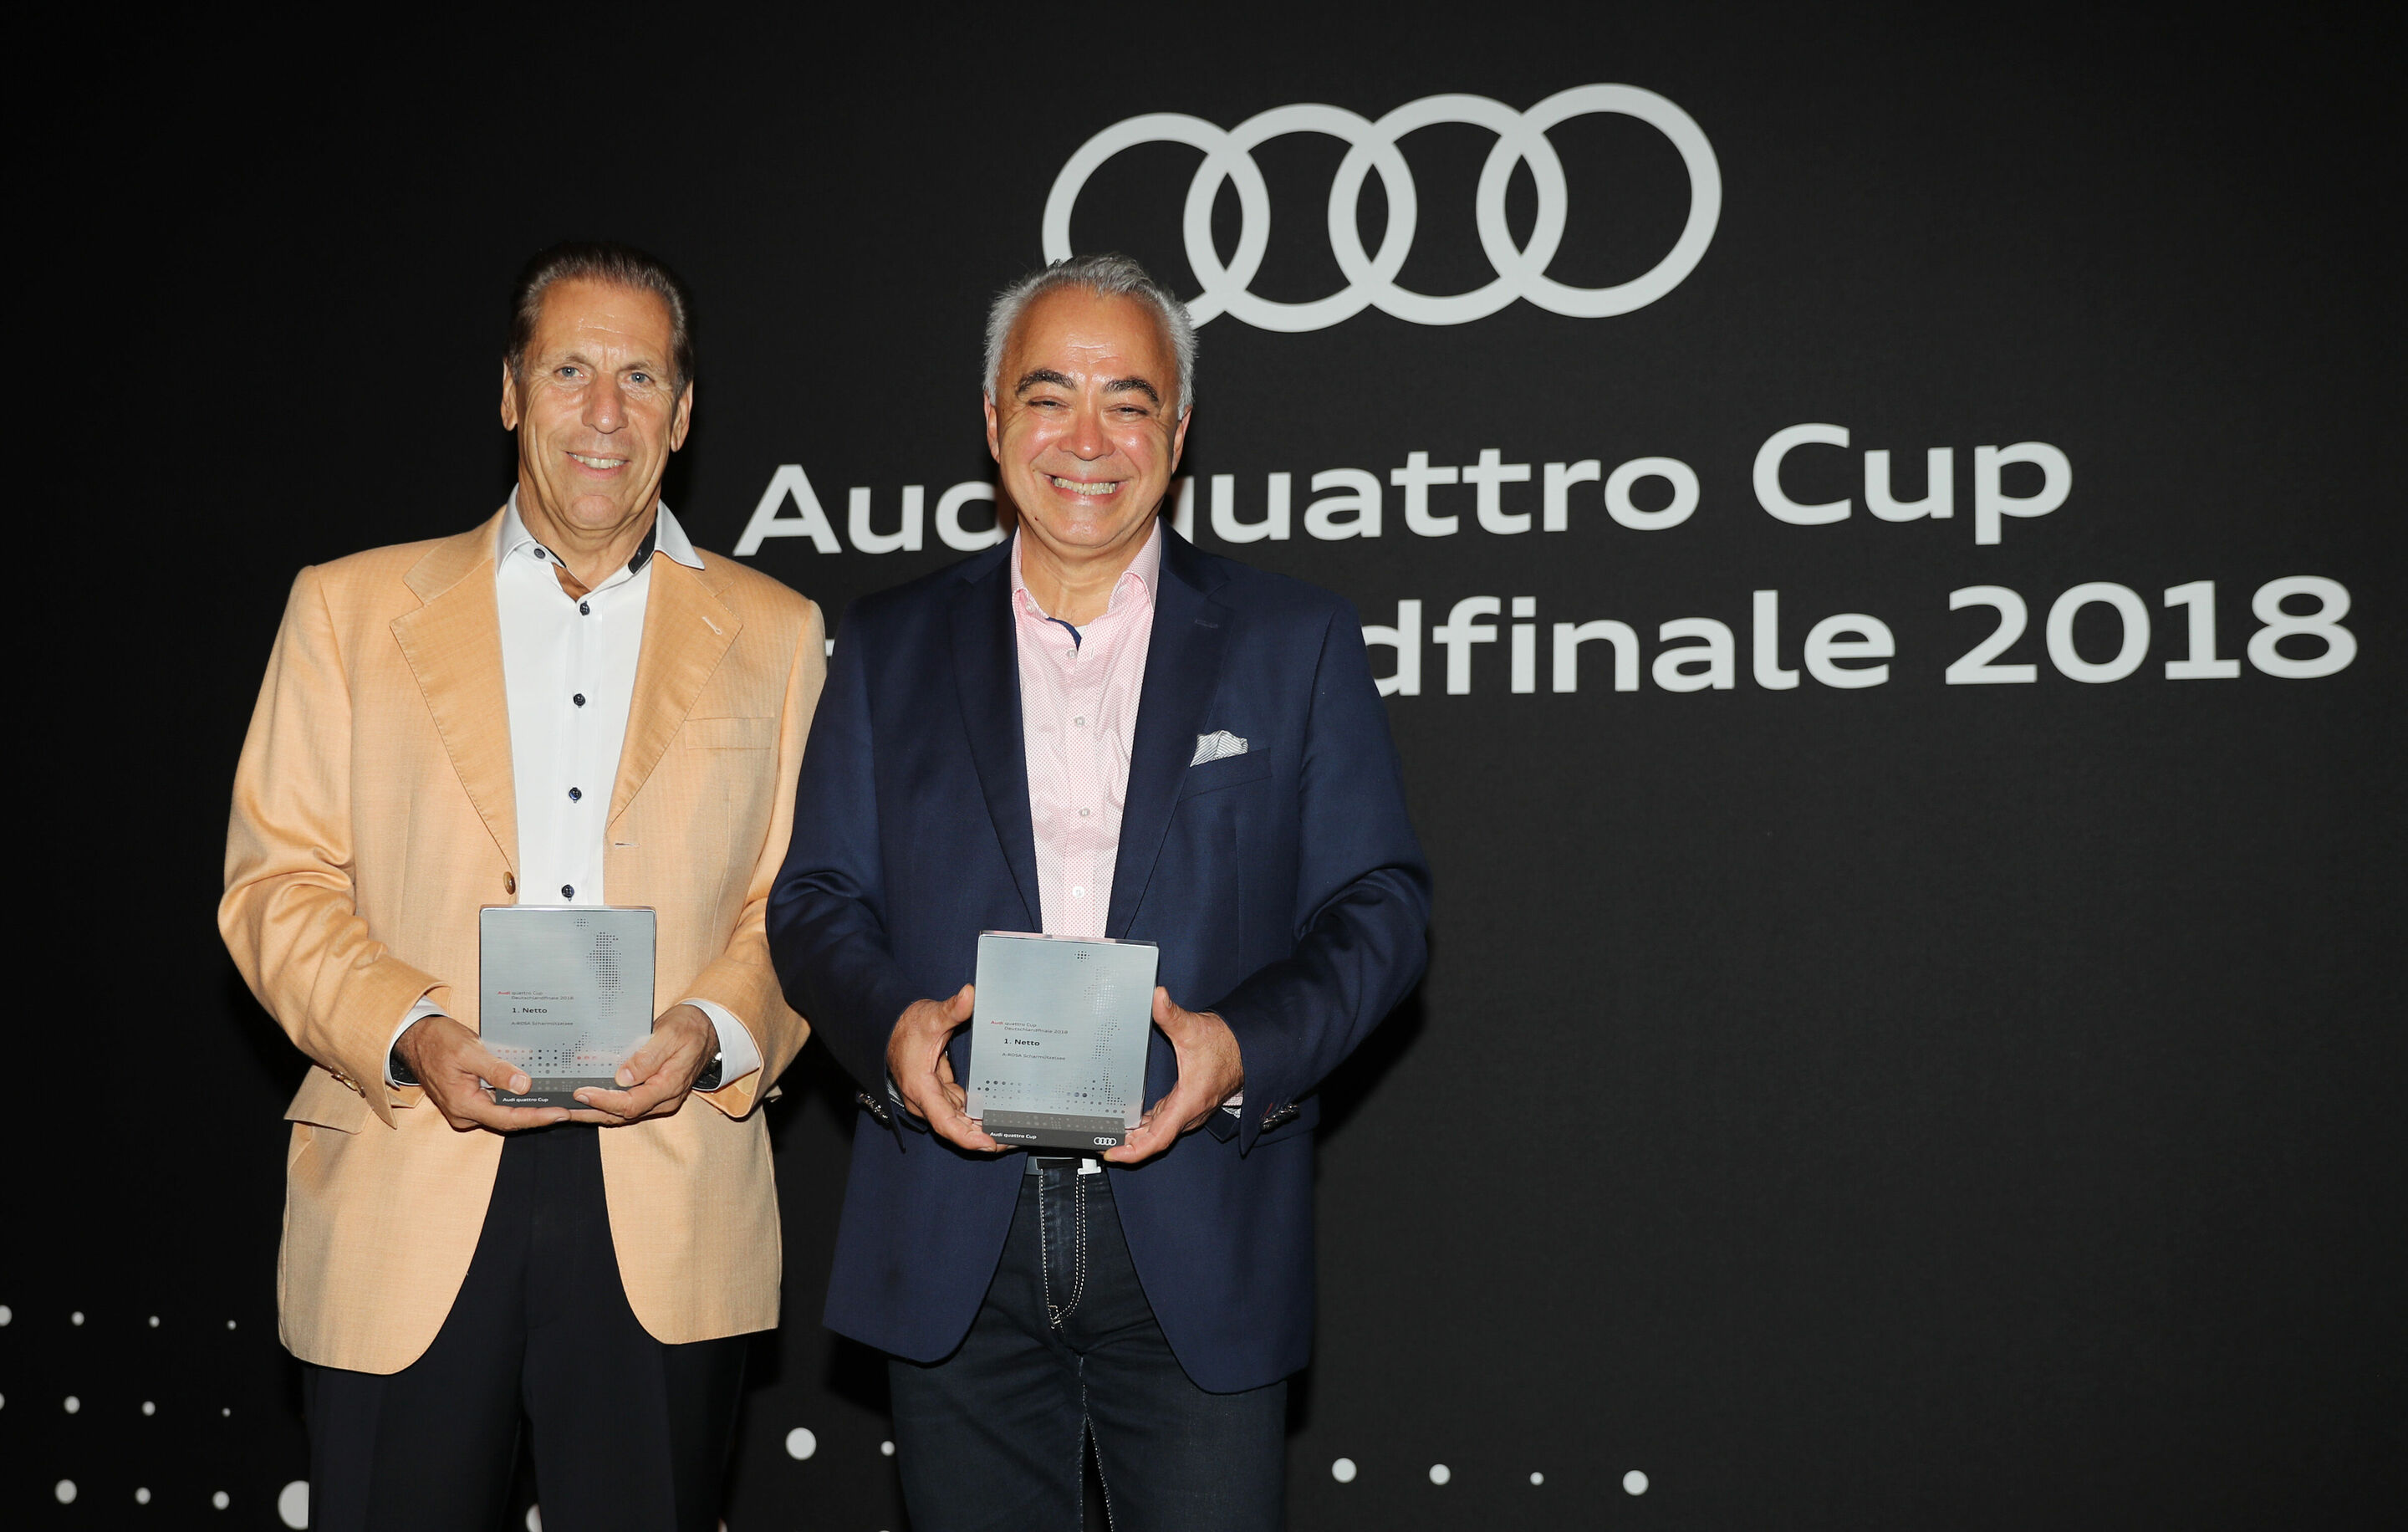 Audi quattro Cup German Final 2018